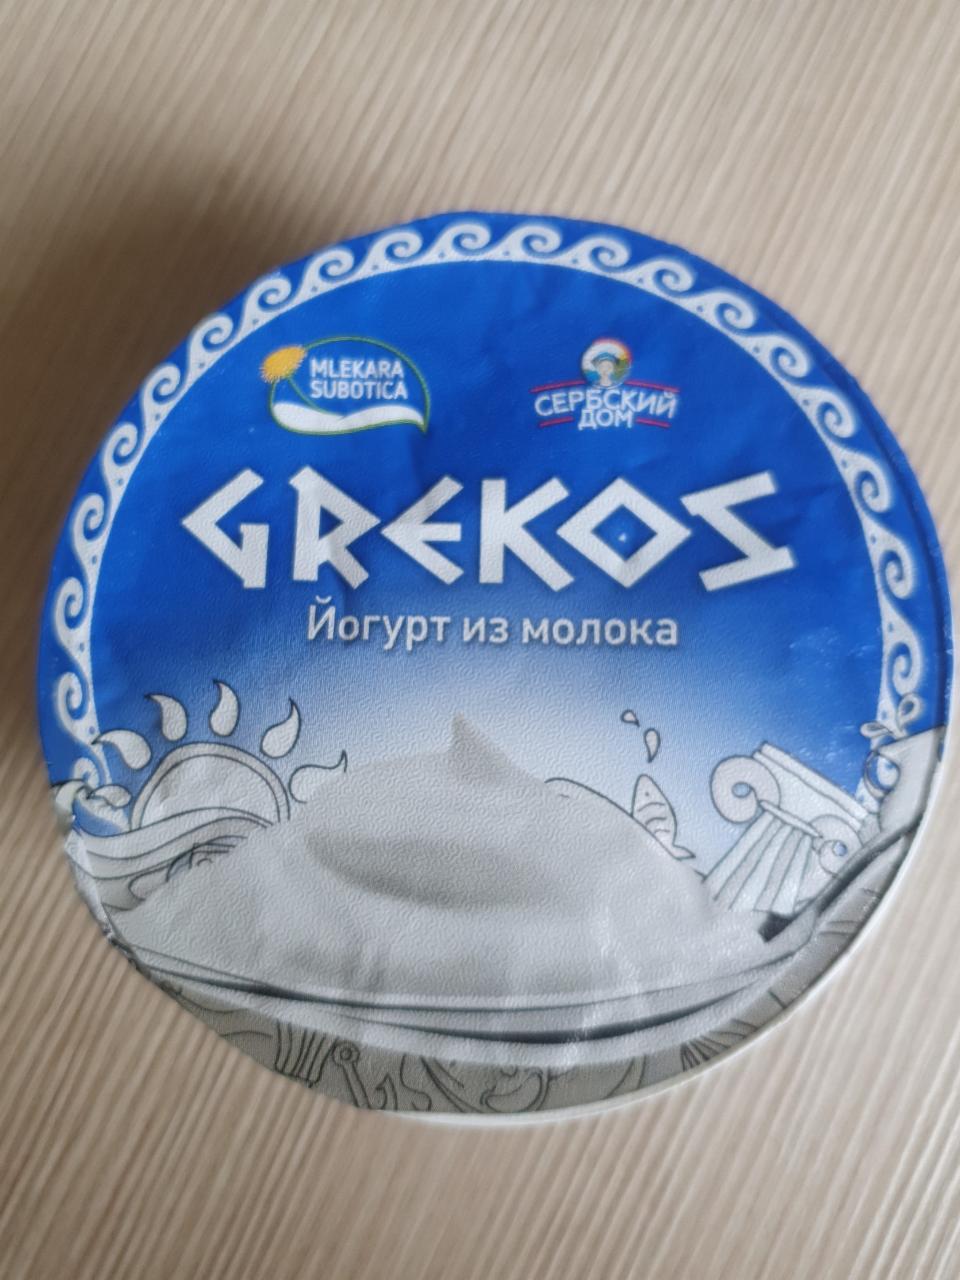 Фото - Греческий йогурт 9% Grekos Сербский дом